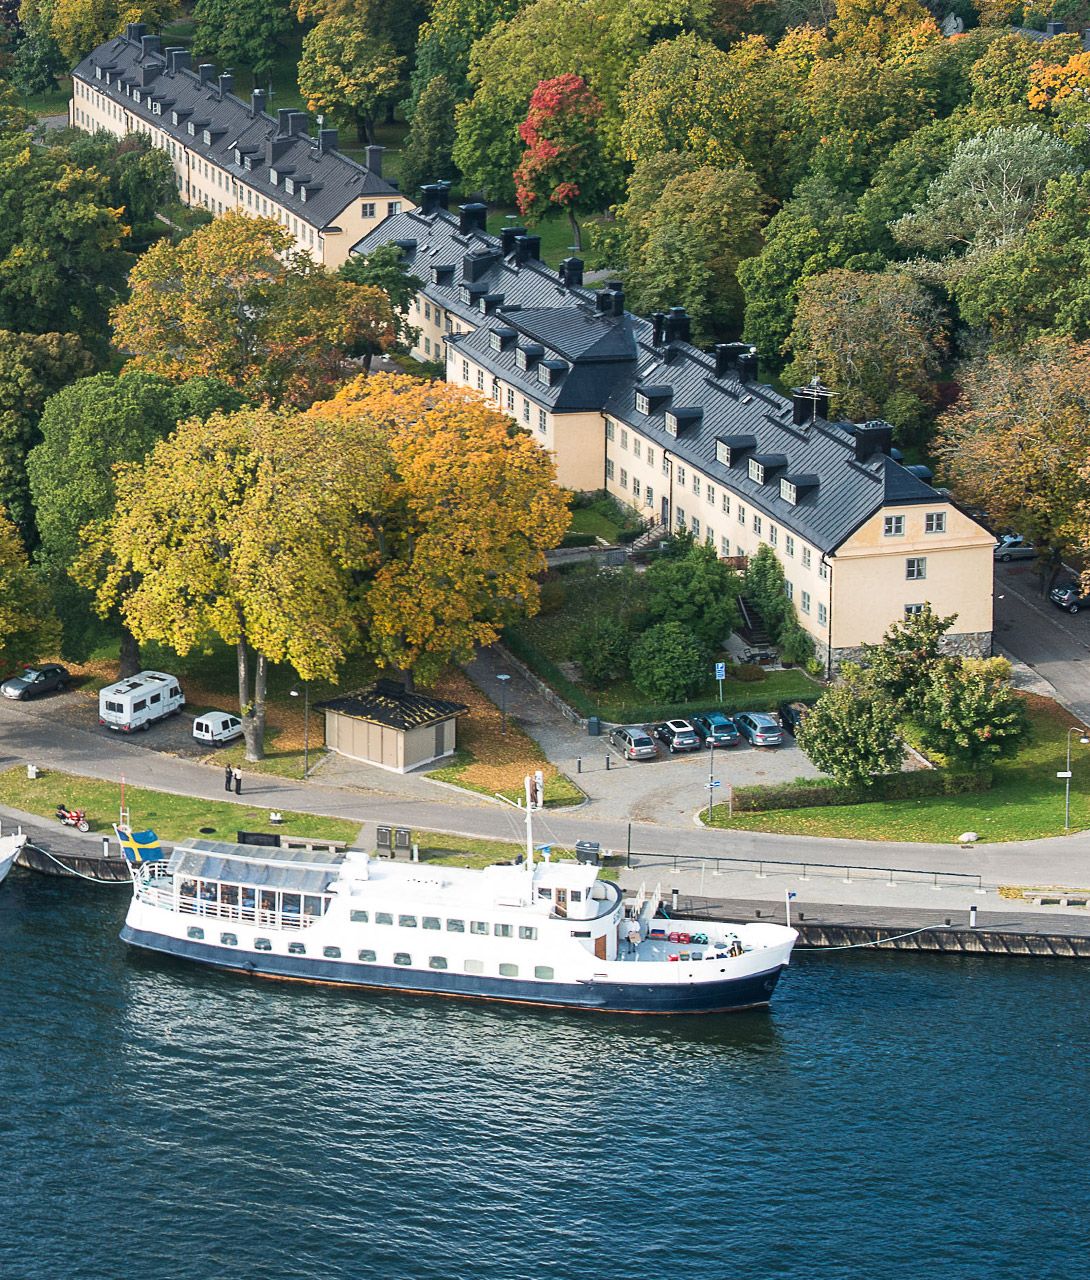 Hotel Skeppsholmen View in Stockholm